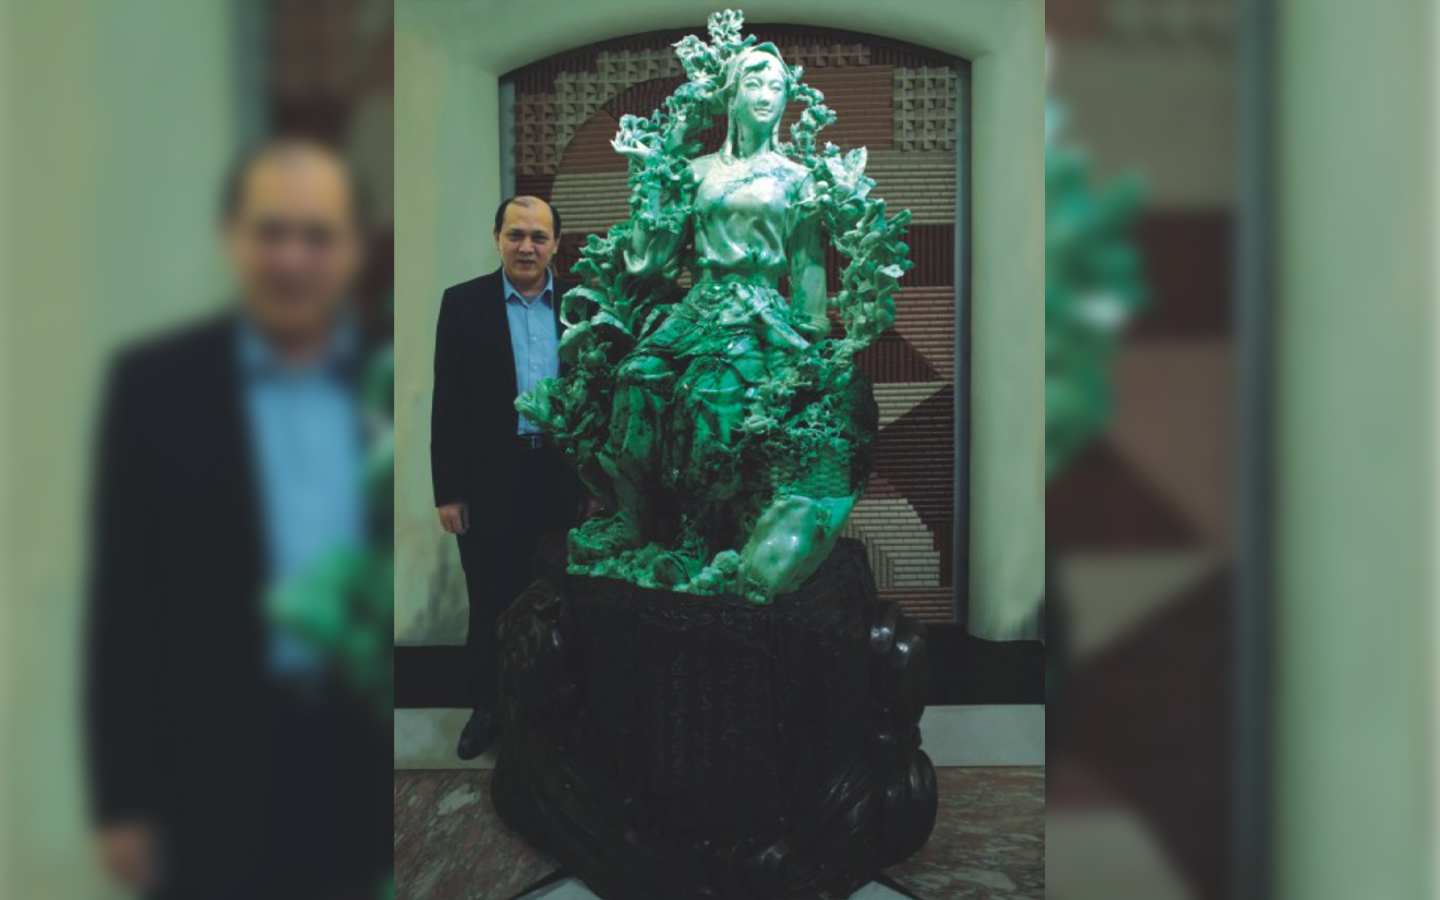 Macao sculptor Liang Wannian wins RMB 80,000 compensation